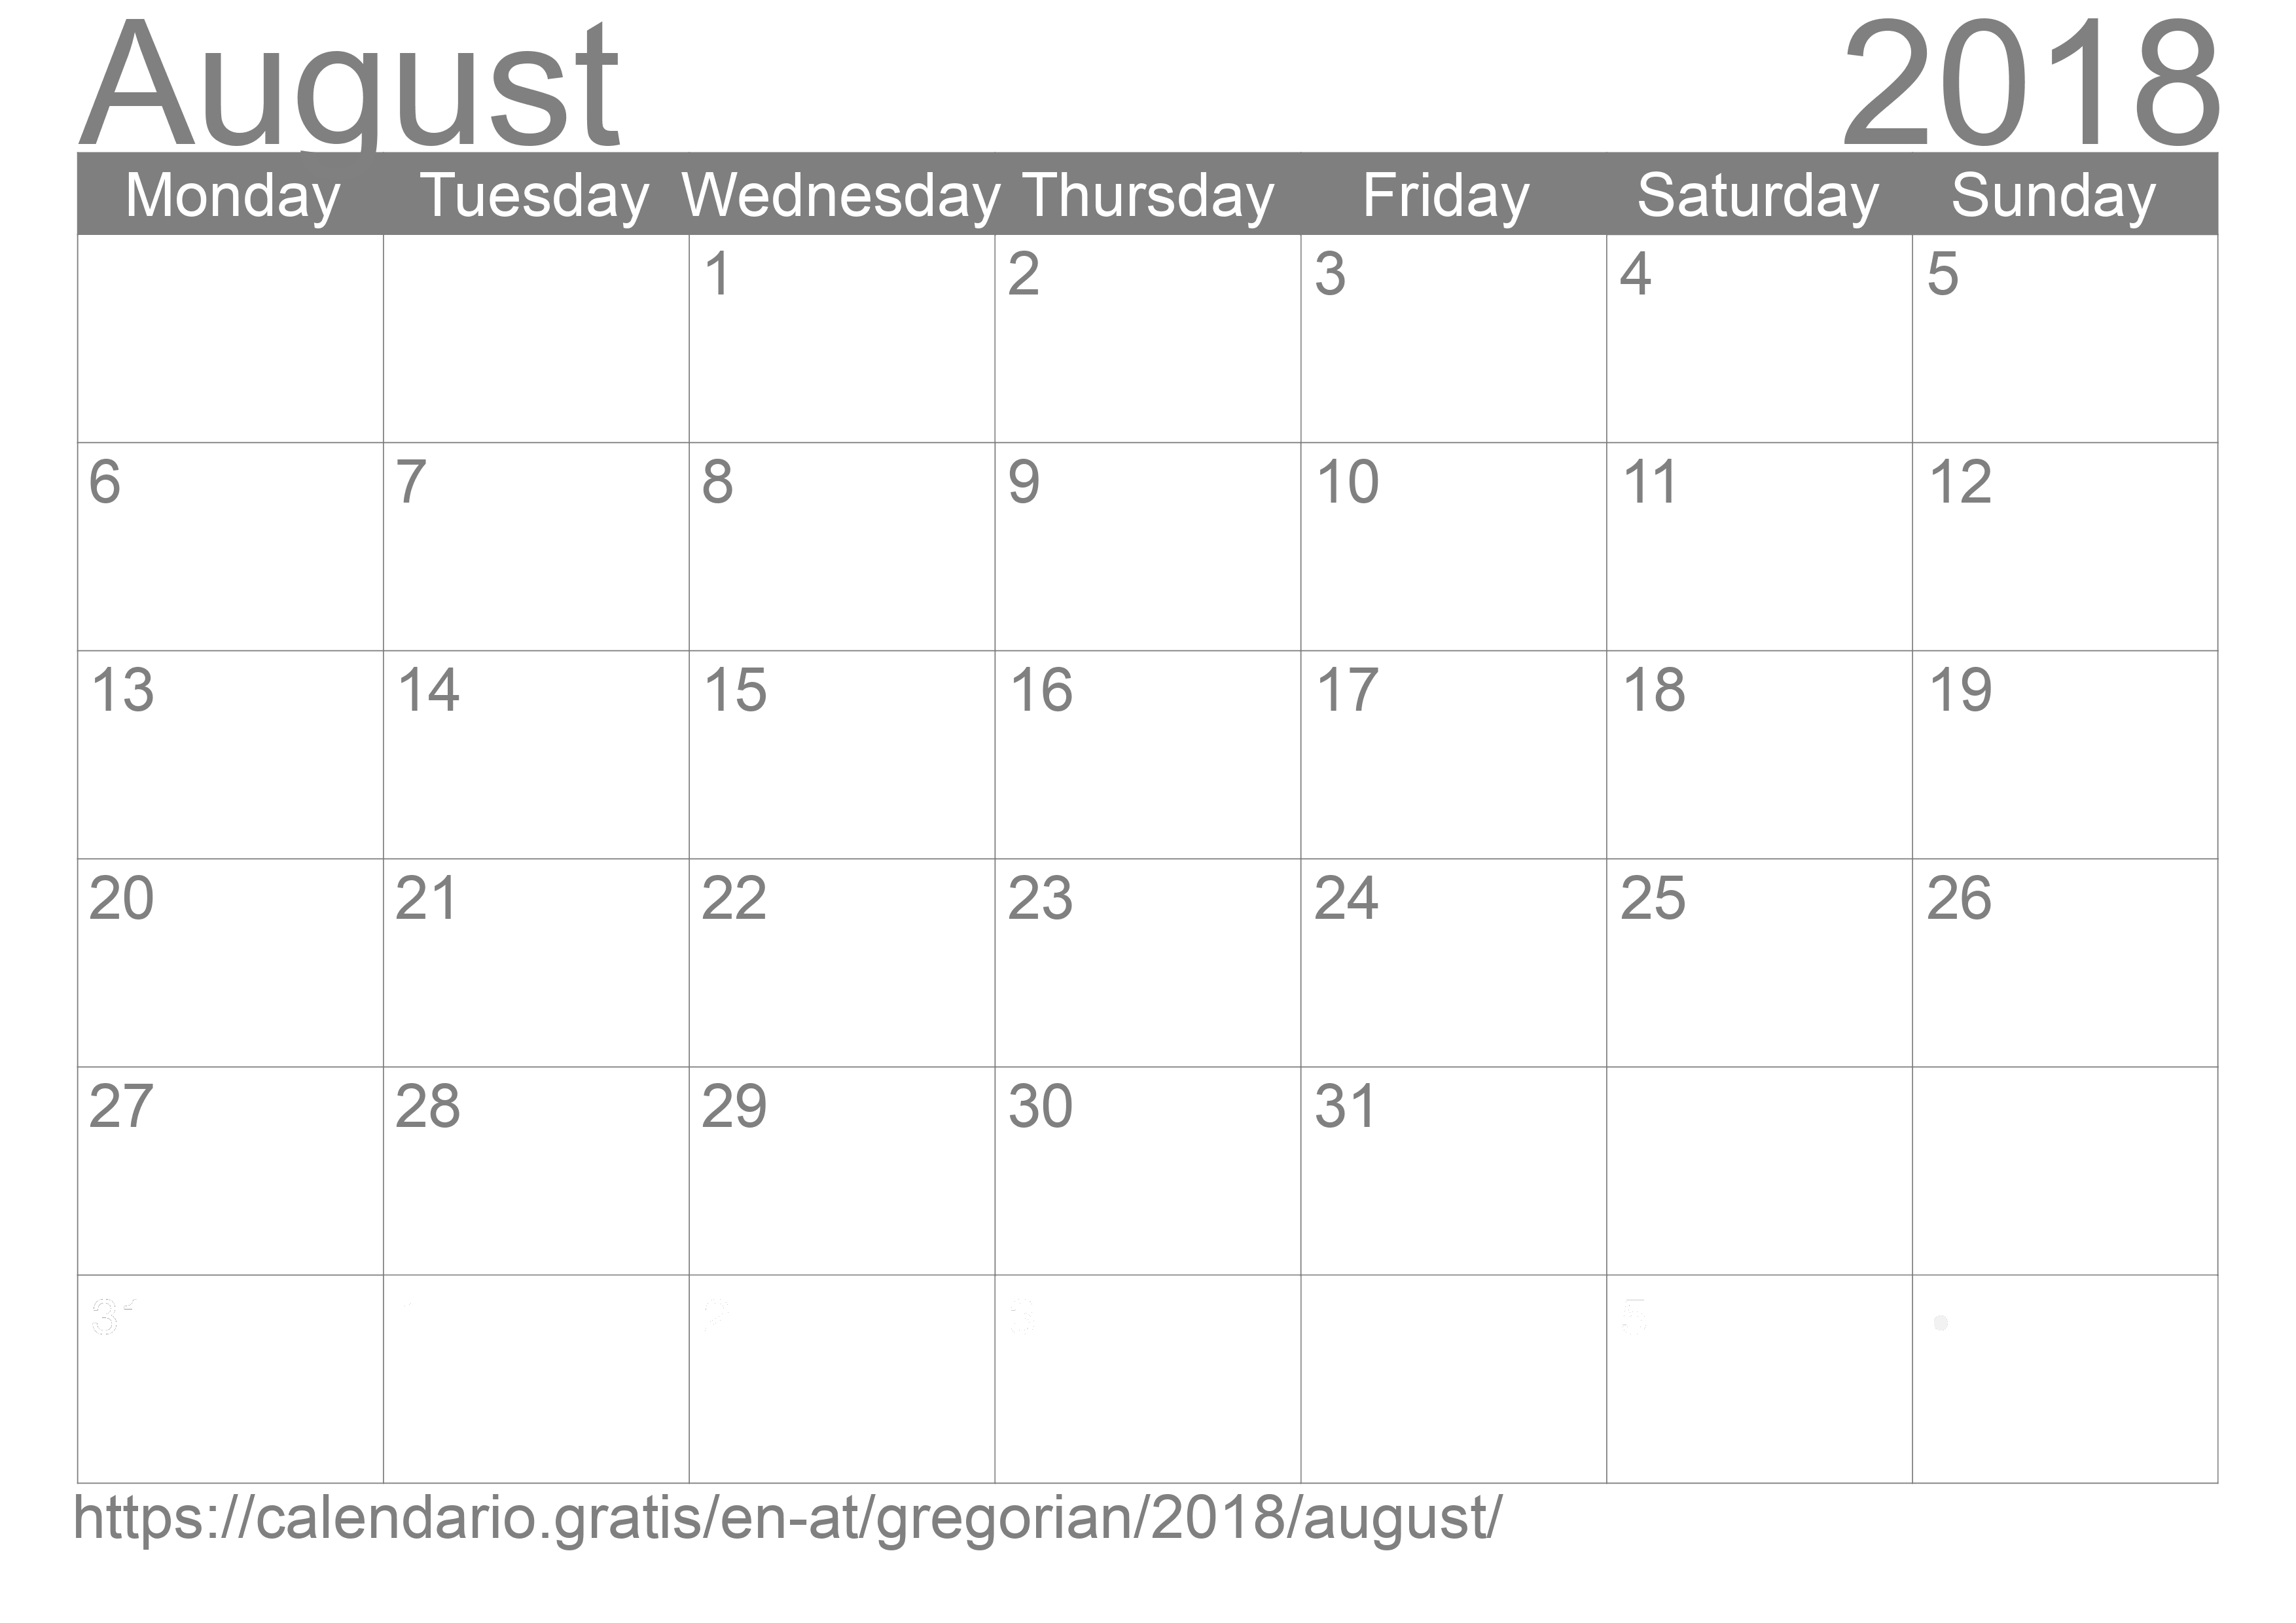 Calendar August 2018 to print